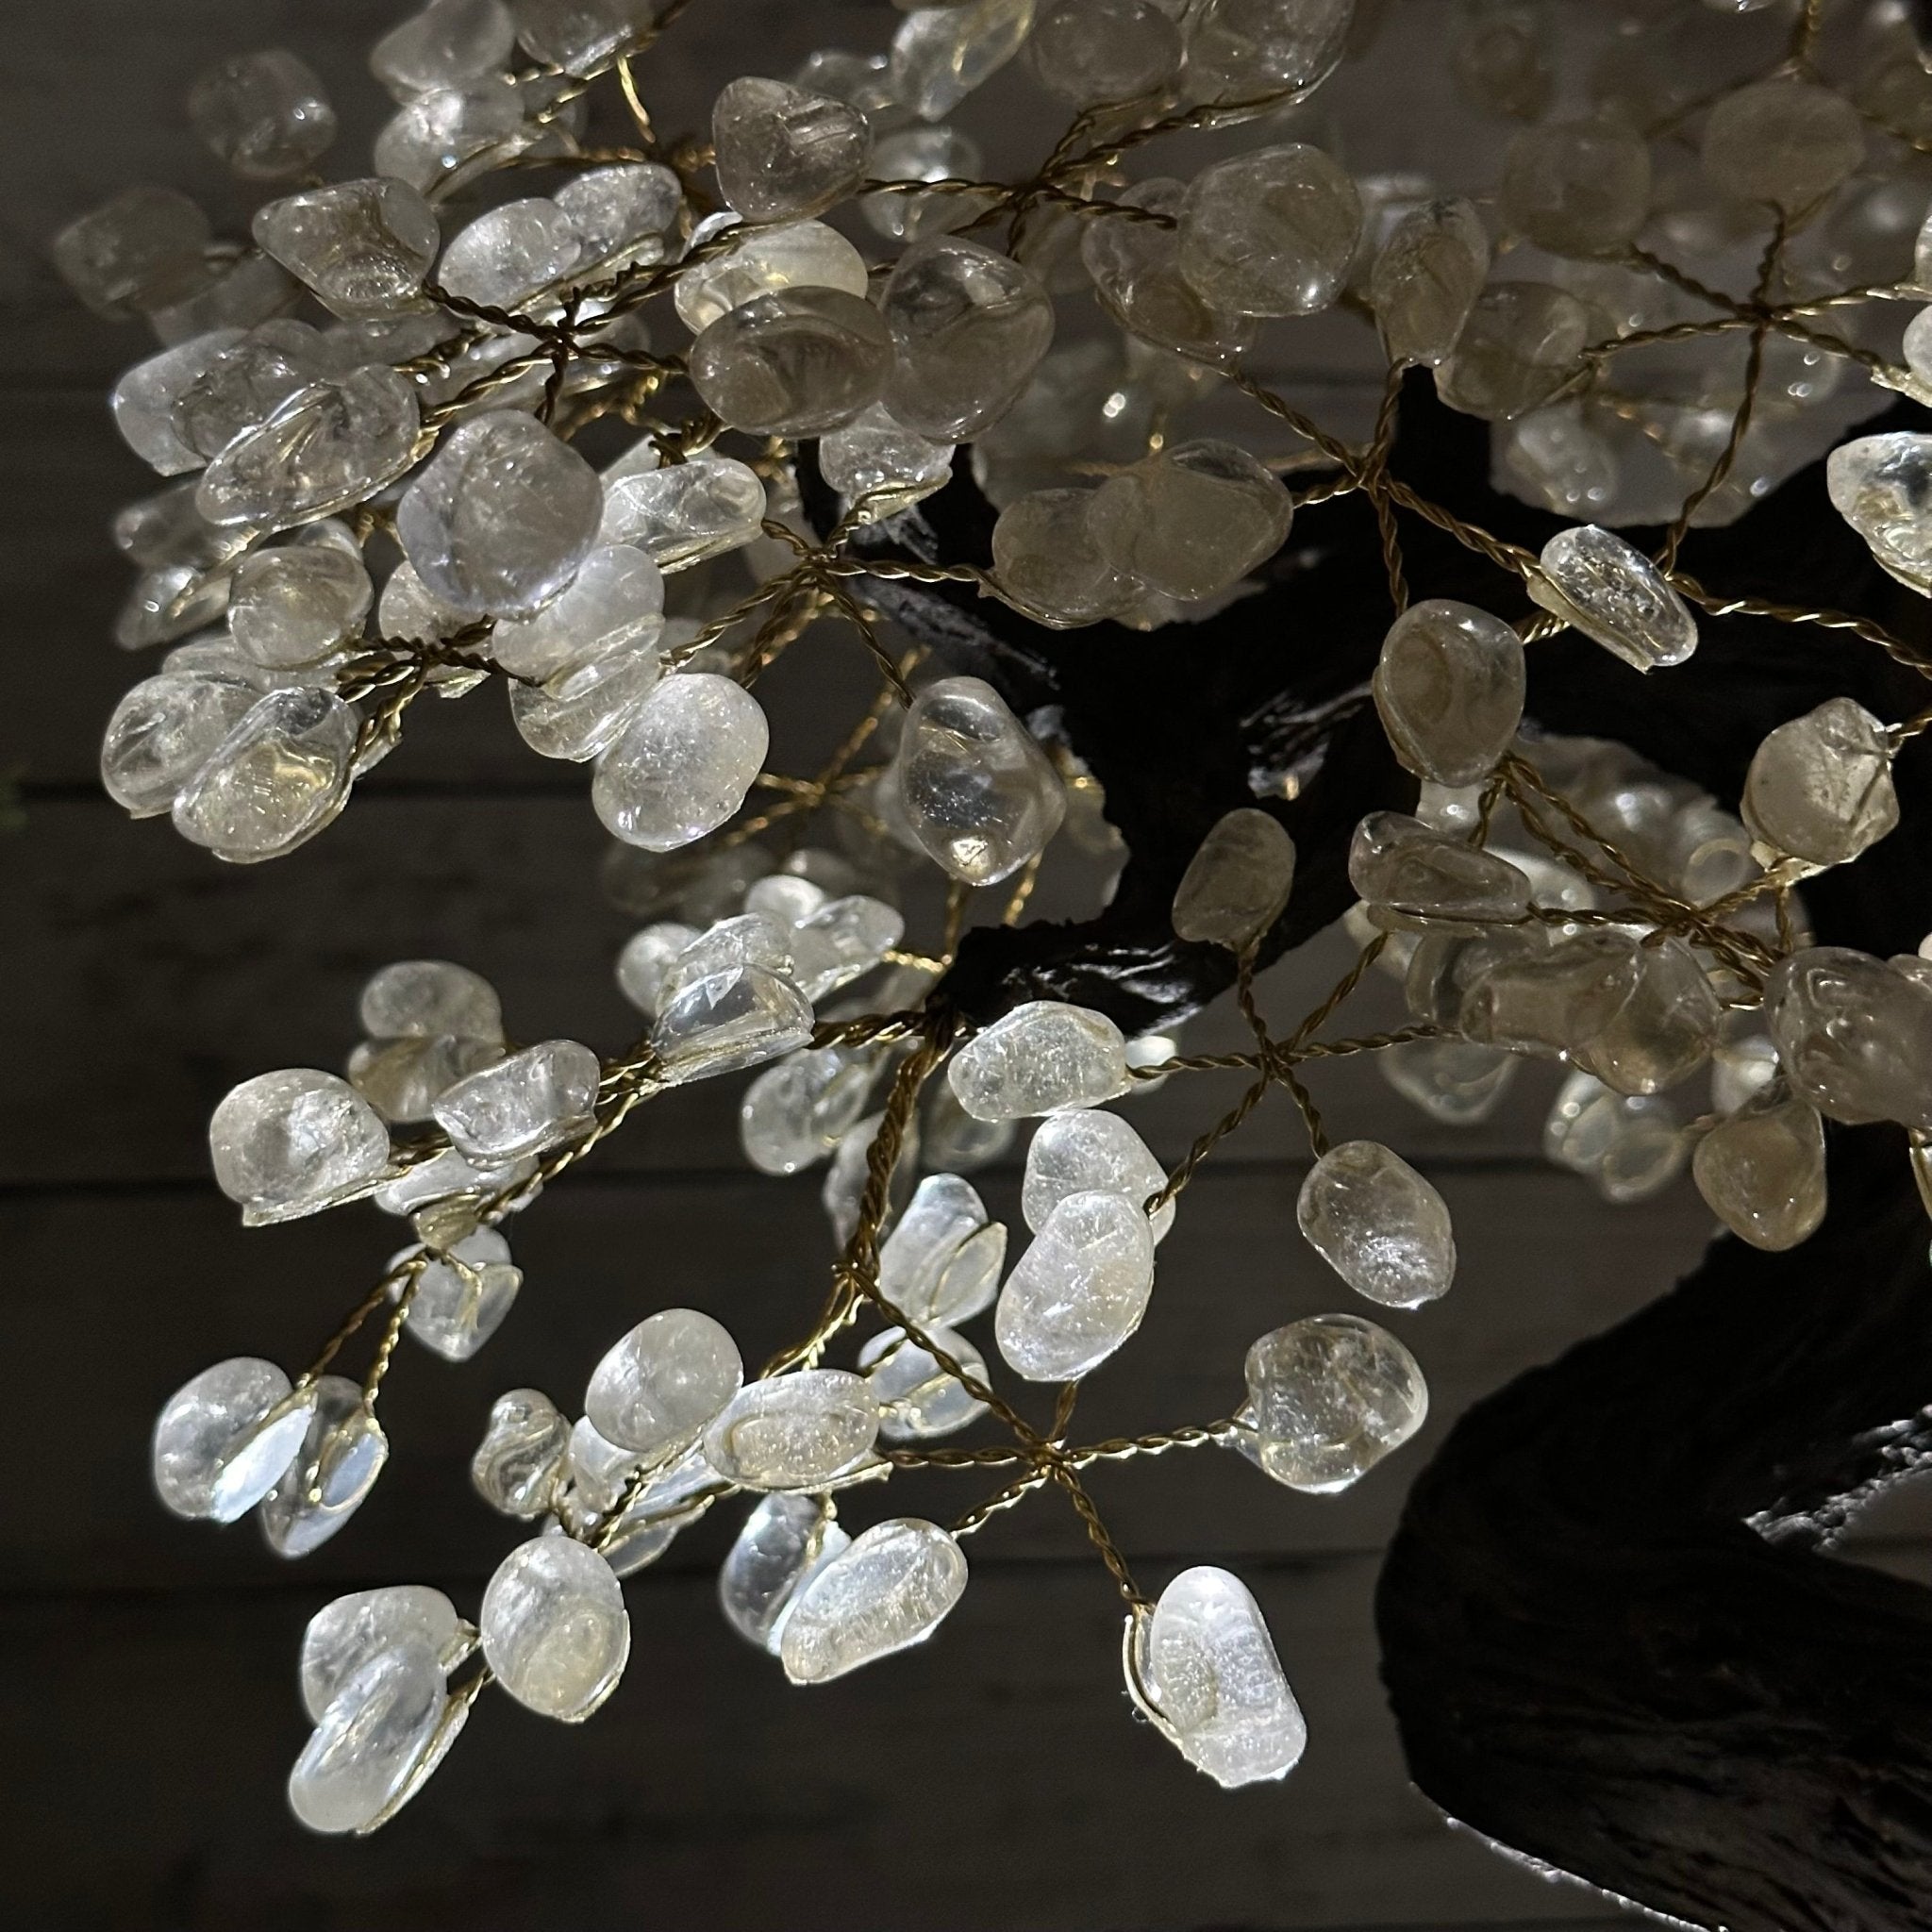 20" Tall Clear Quartz Gemstone Tree on an Amethyst Base, 540 gems #5406CQ - 009 - Brazil GemsBrazil Gems20" Tall Clear Quartz Gemstone Tree on an Amethyst Base, 540 gems #5406CQ - 009Gemstone Trees5406CQ - 009